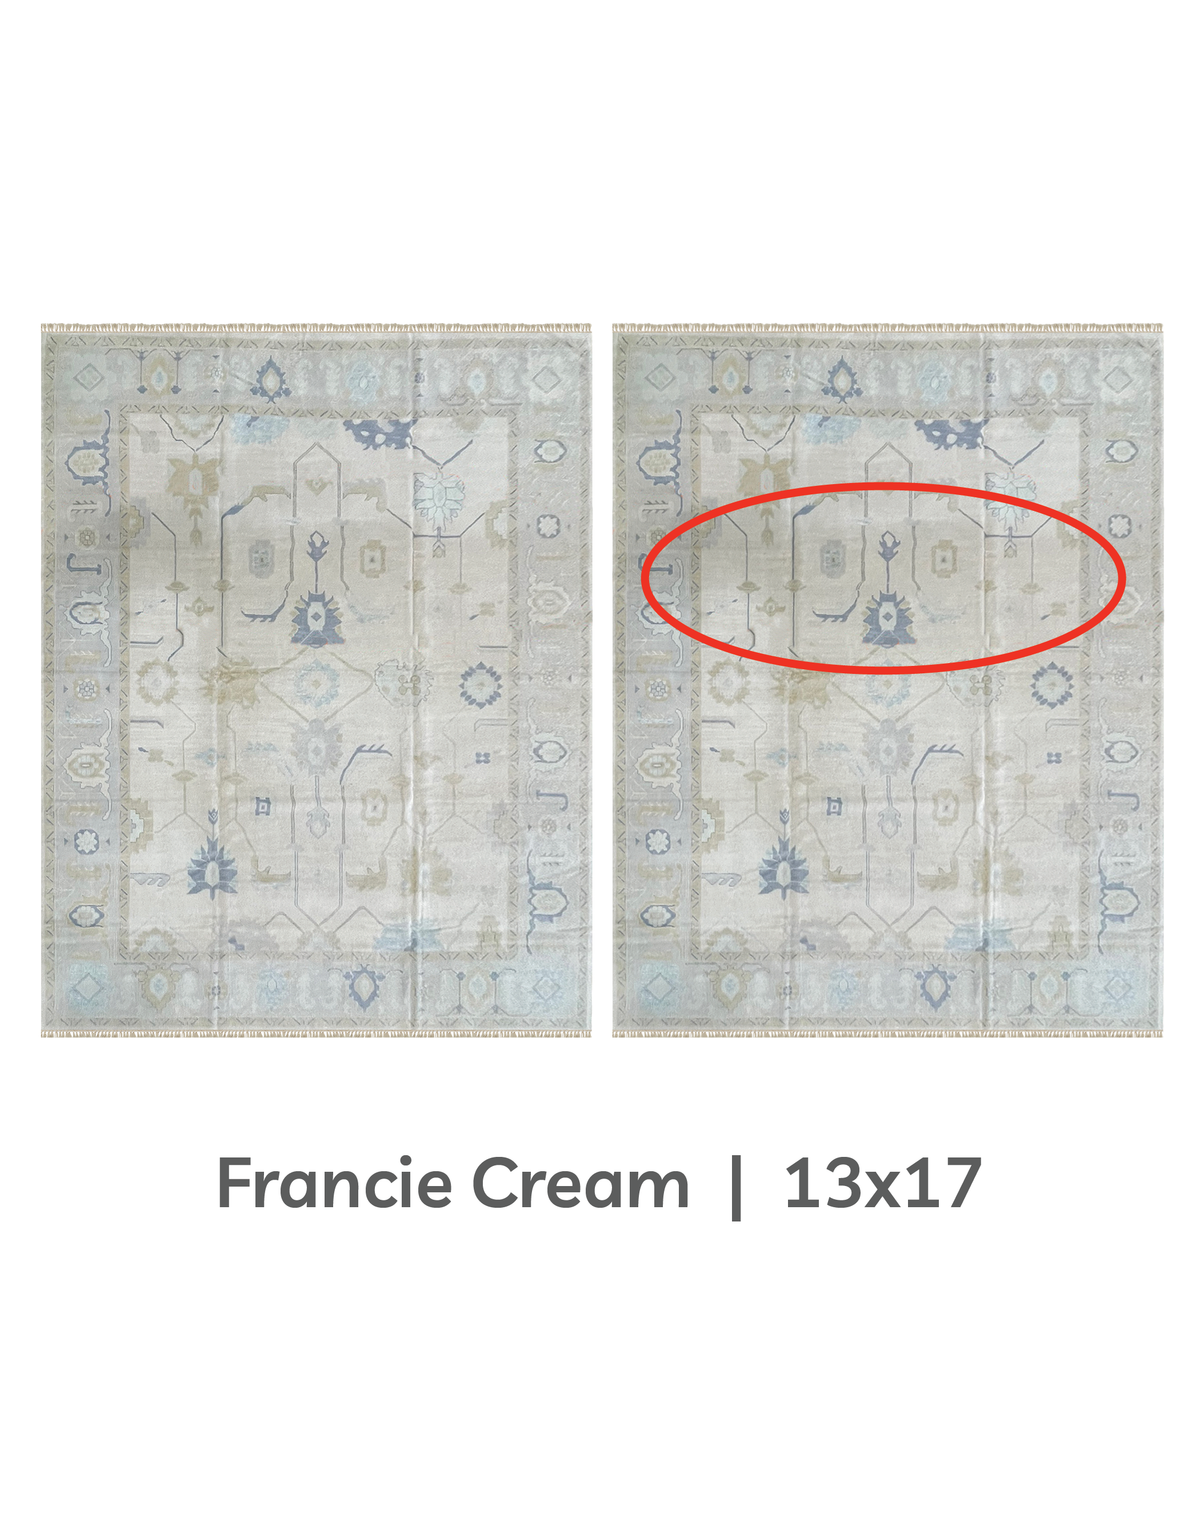 francie cream | final sale